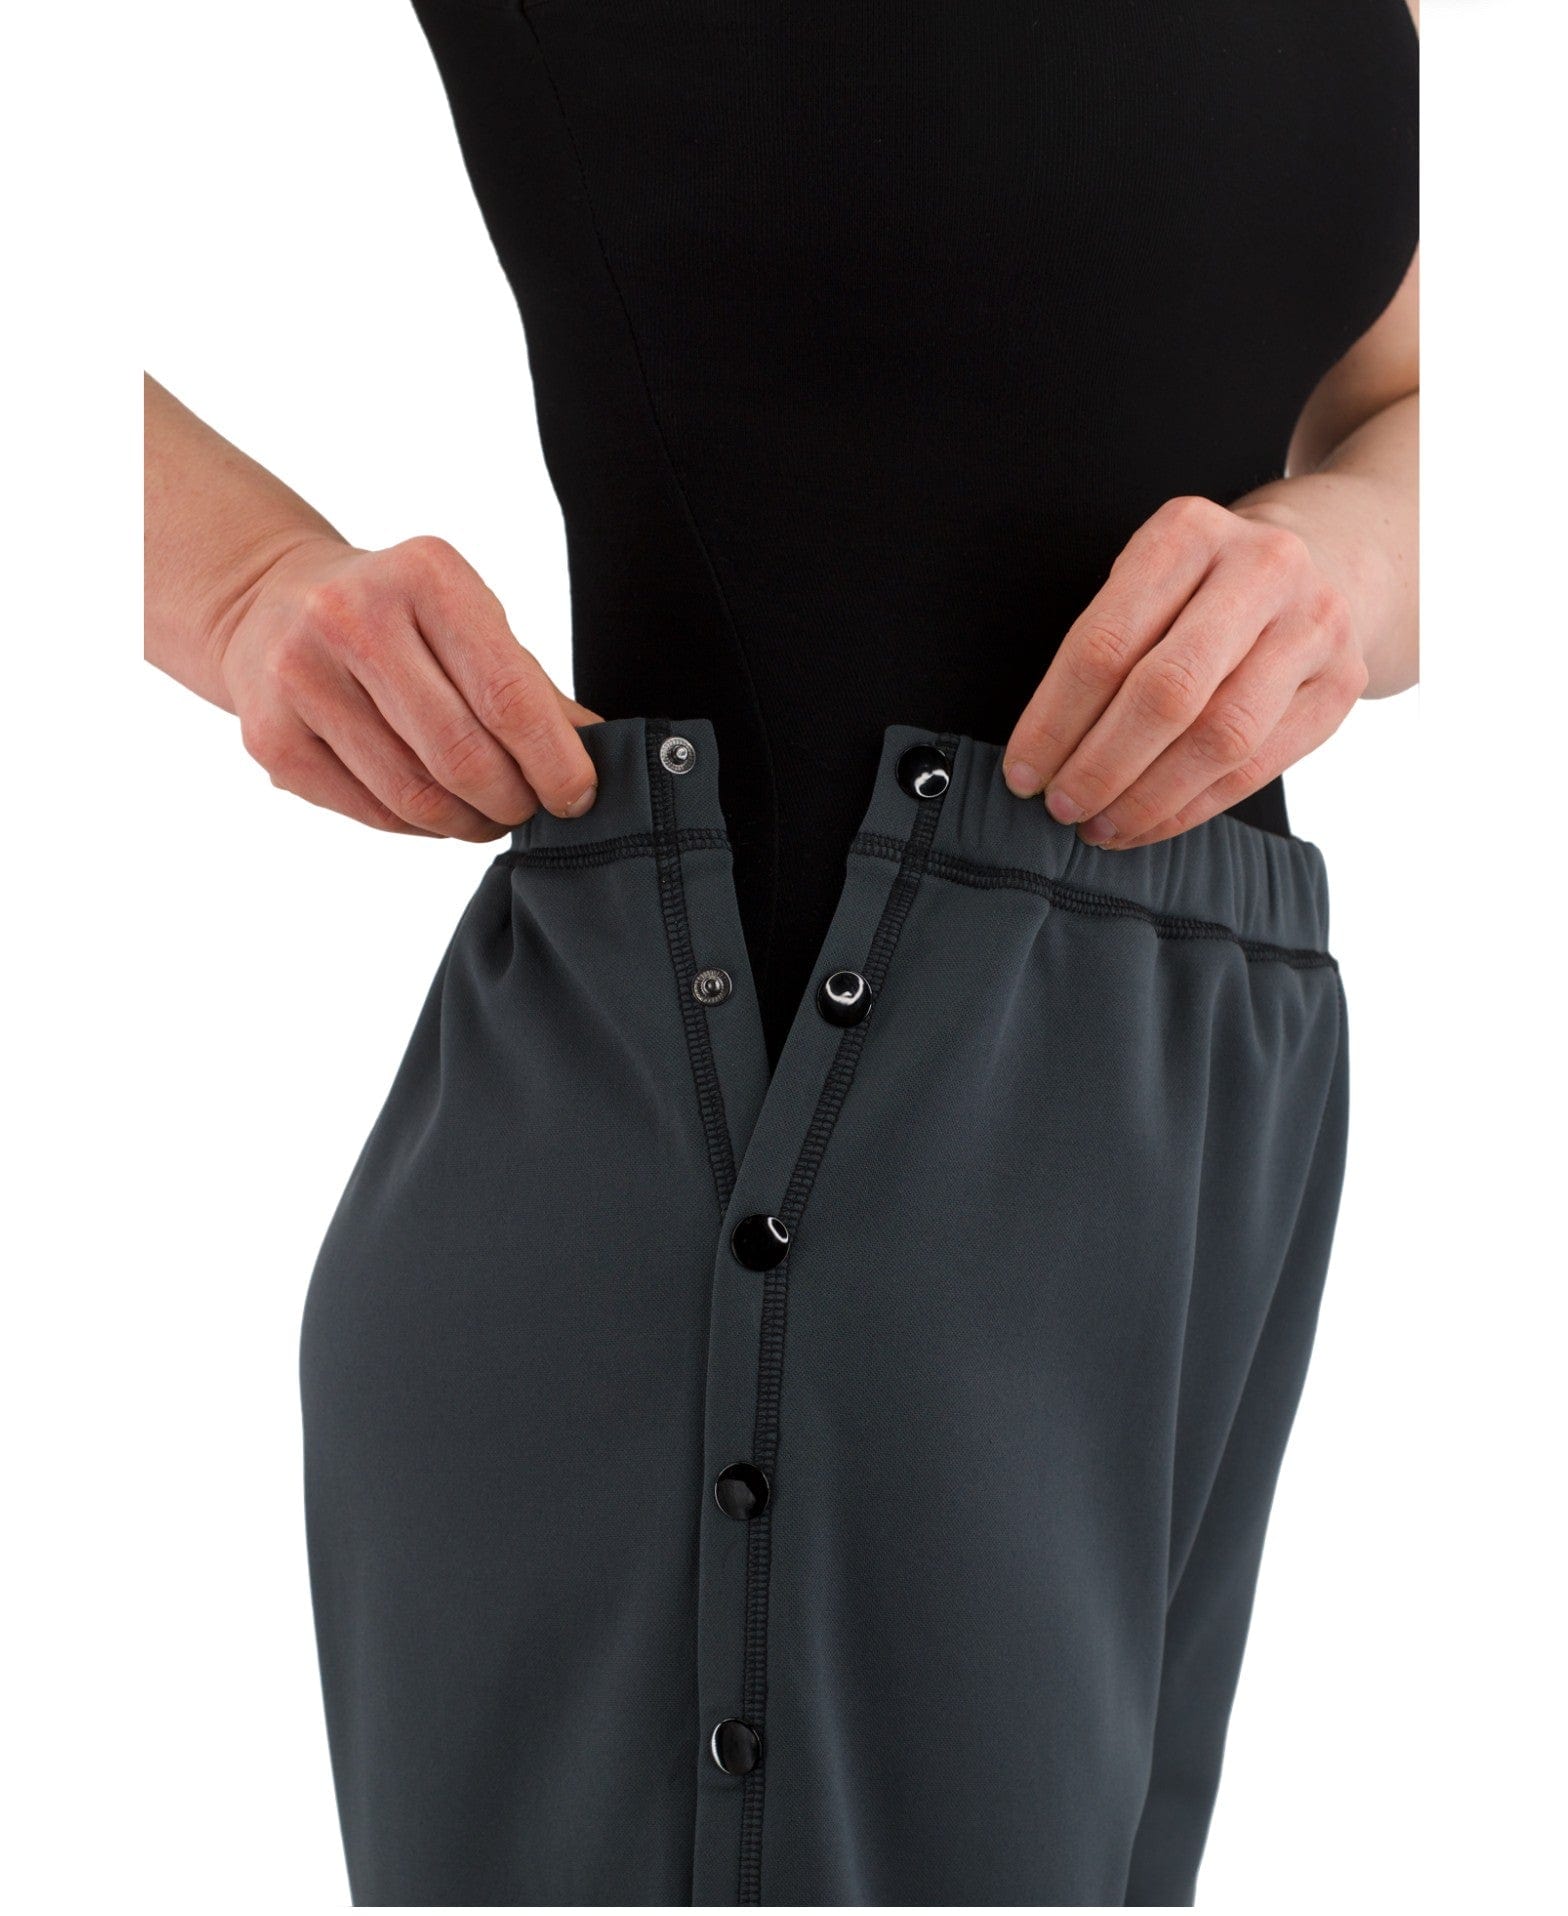 GREUS Post Surgery Mens Women Tear Away Underwear Reusable Stick-on Panties  Breathable Briefs Elderly Recovery(XL/2XL/3XL)